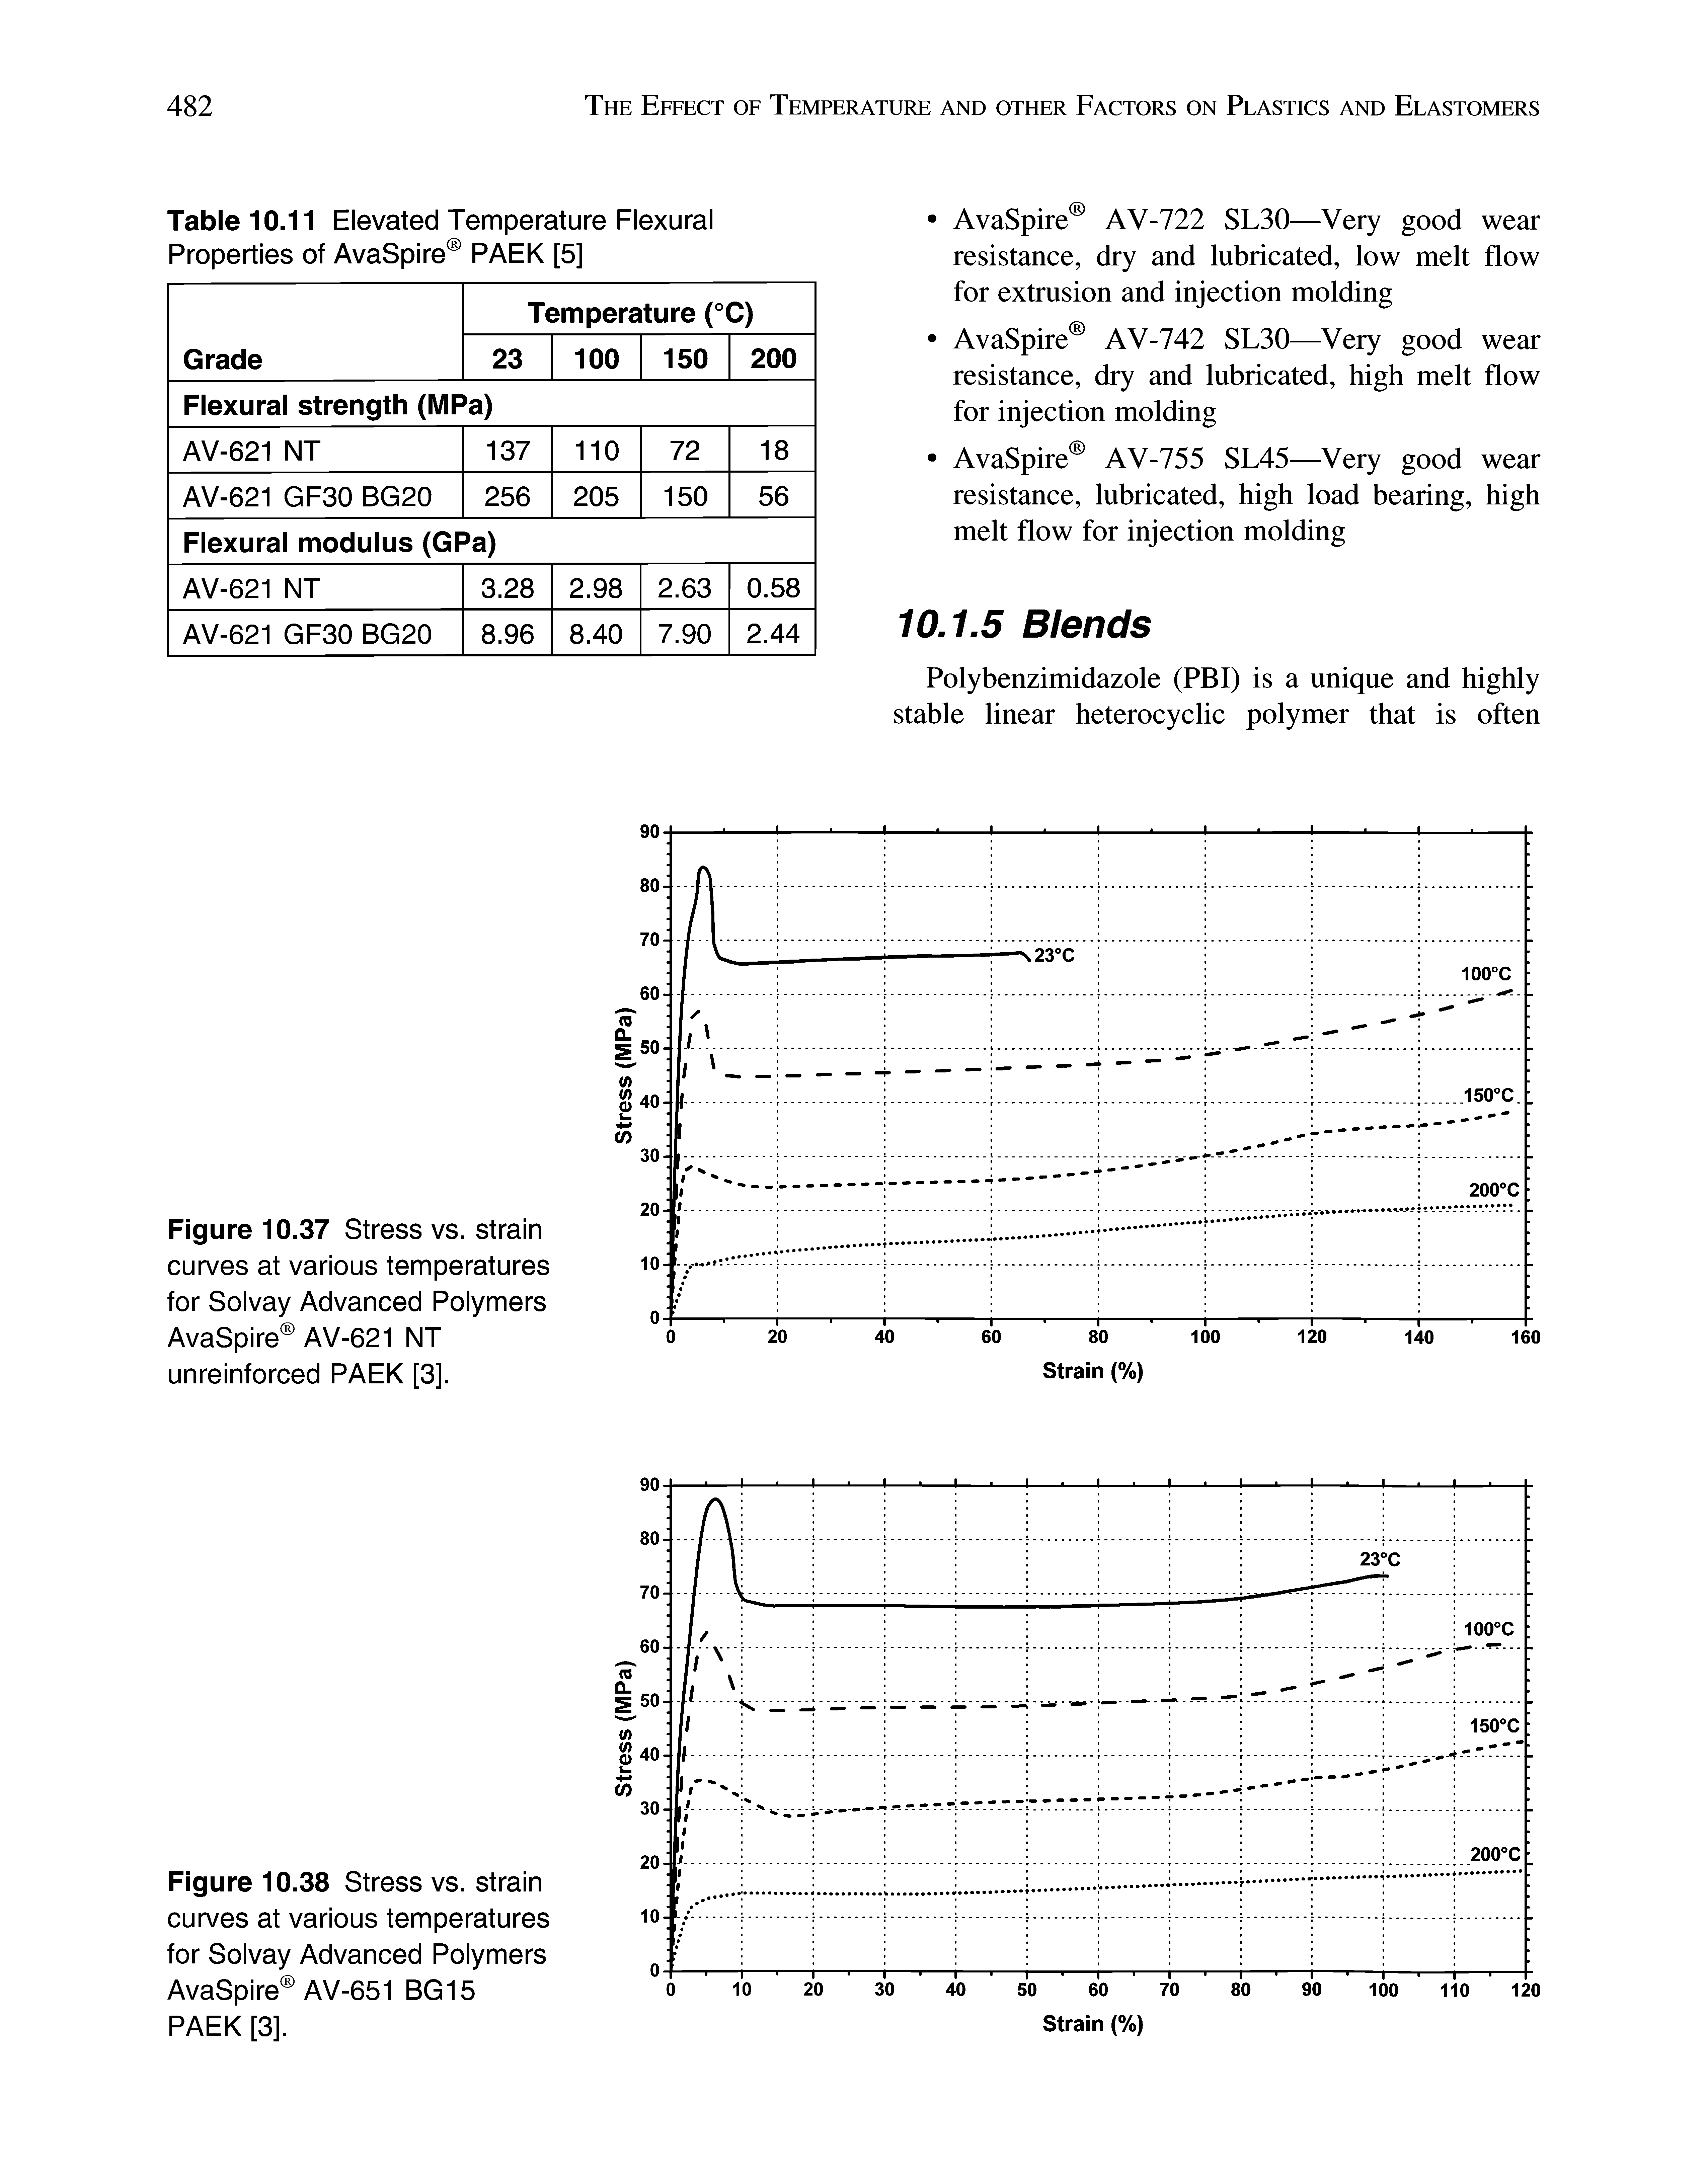 Figure 10.37 Stress vs. strain curves at various temperatures for Solvay Advanced Polymers AvaSpire AV-621 NT unreinforced PAEK [3].